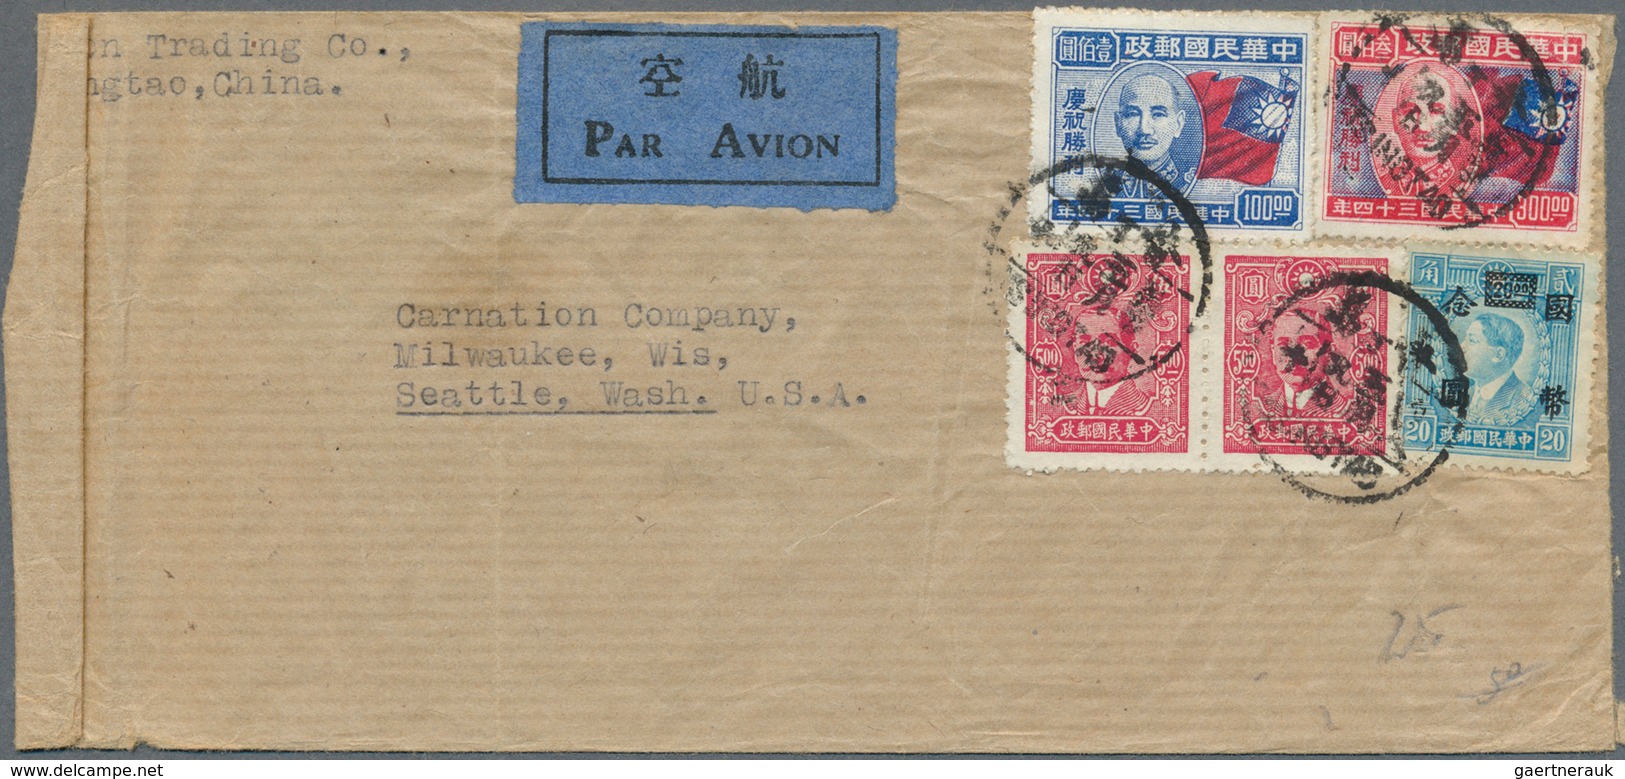 China: 1923/48, used in Tsingtau: covers (prewar 5/occupation 4/postwar 5), used stationery (2), ppc